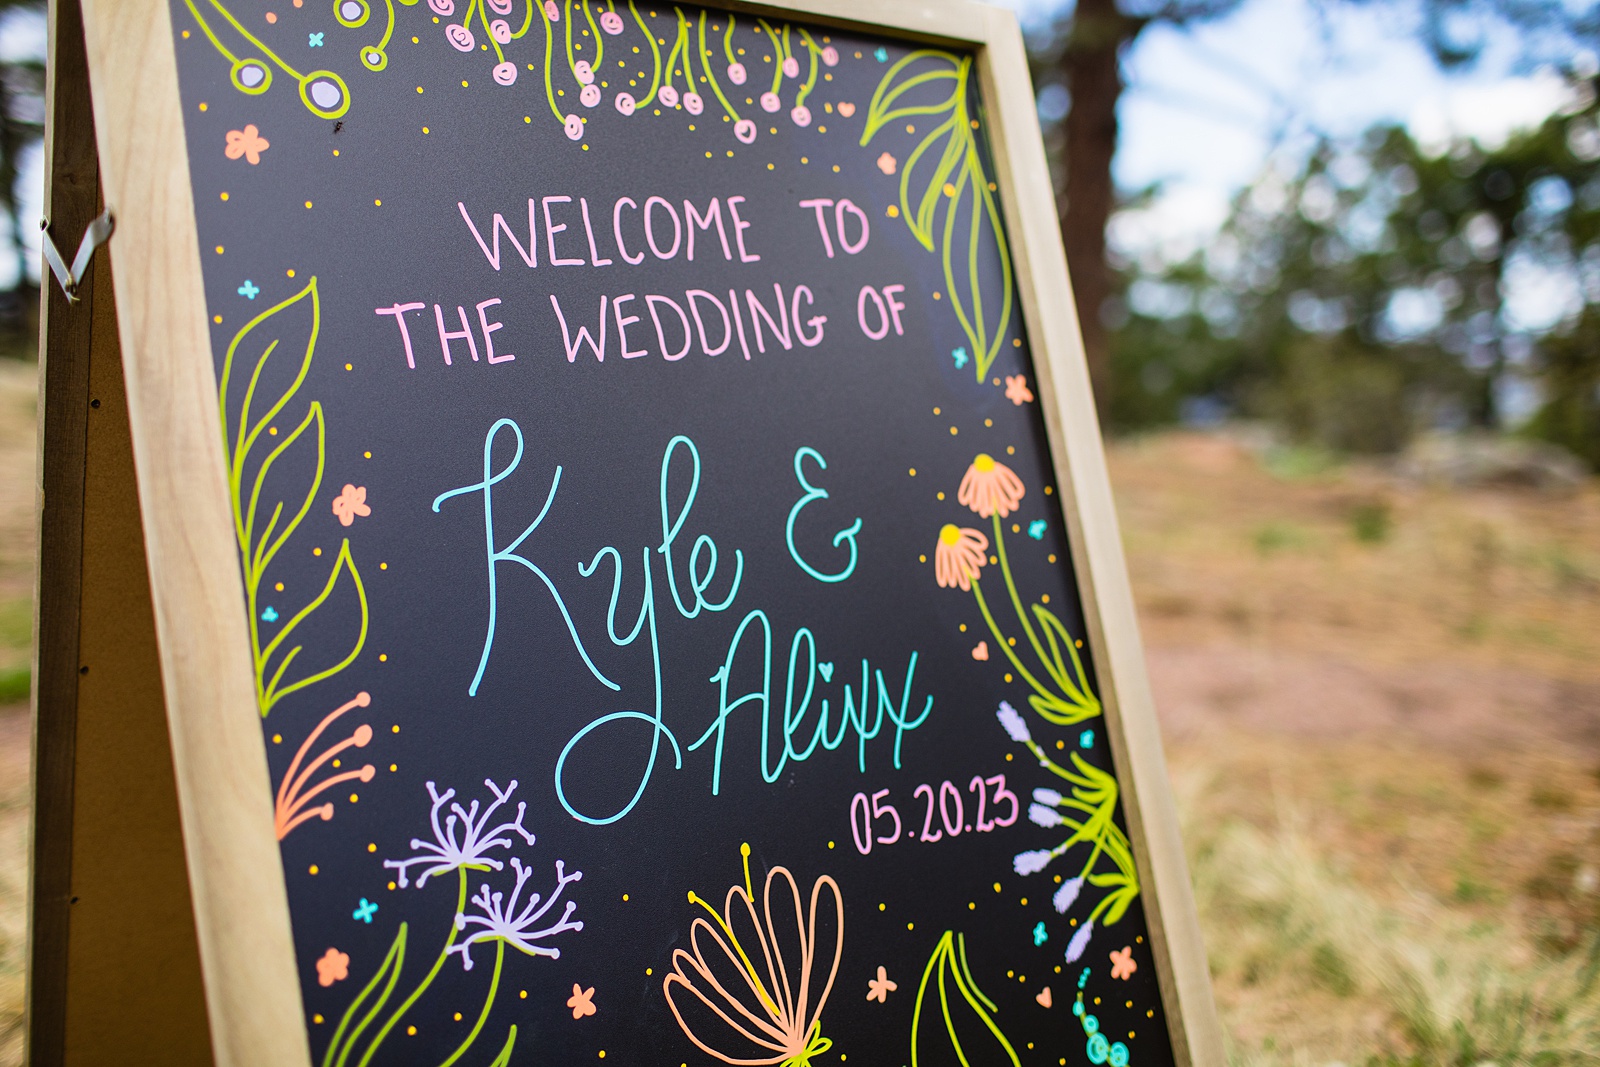 Wedding ceremony at Mogollon Rim by Arizona elopement photographer PMA Photography.